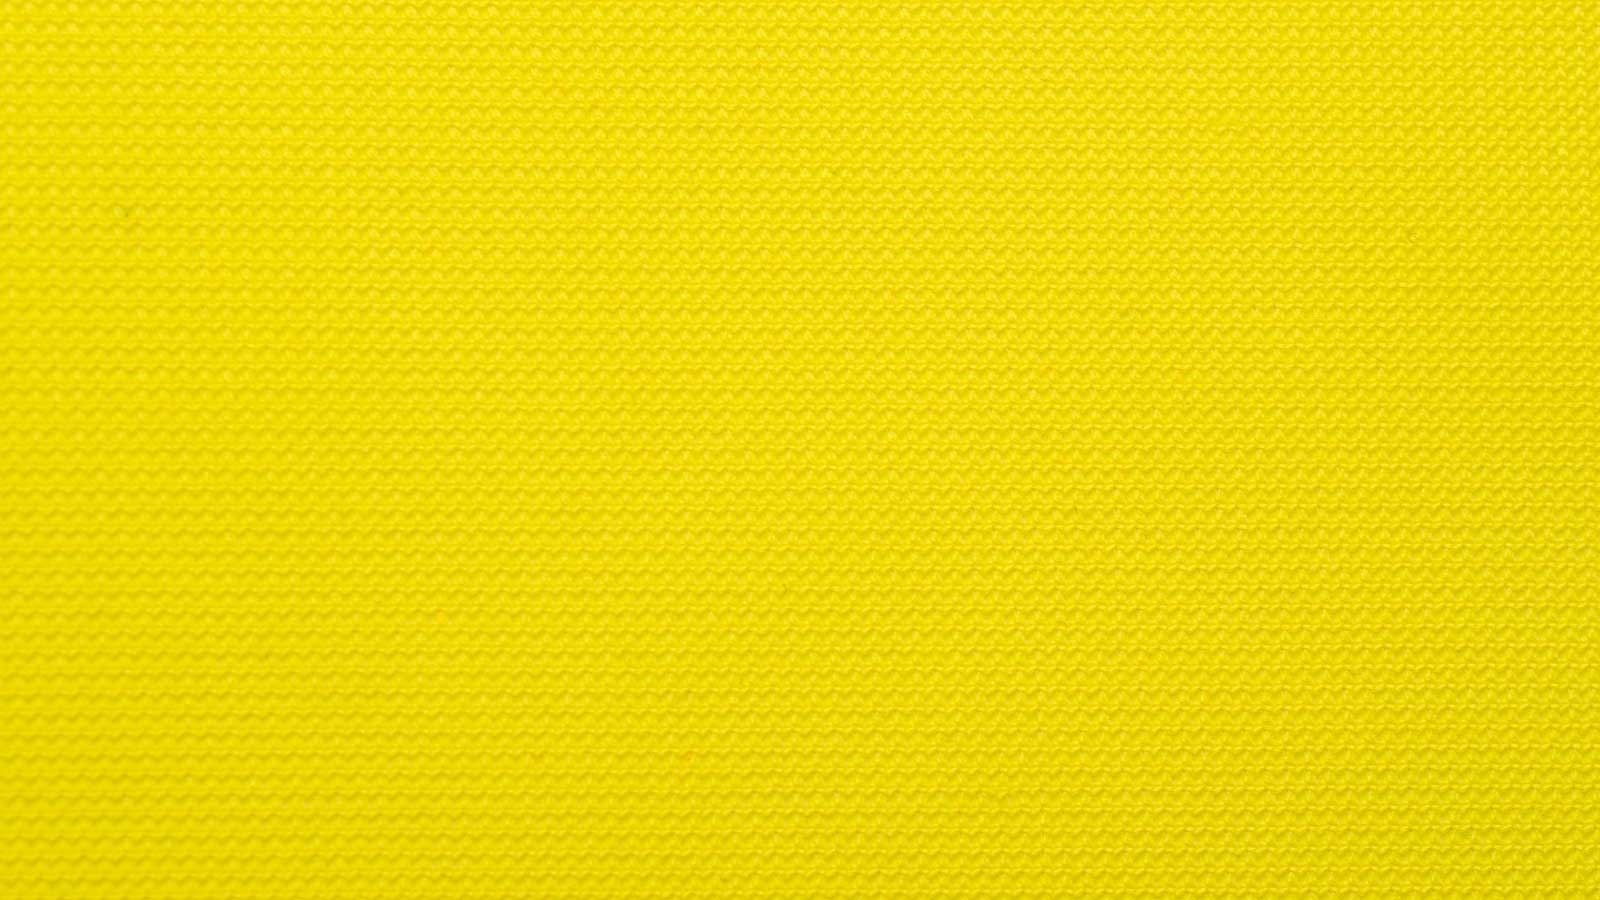 Fontex-empresa-tejidos-barcelona-producto-chalecos-amarillo